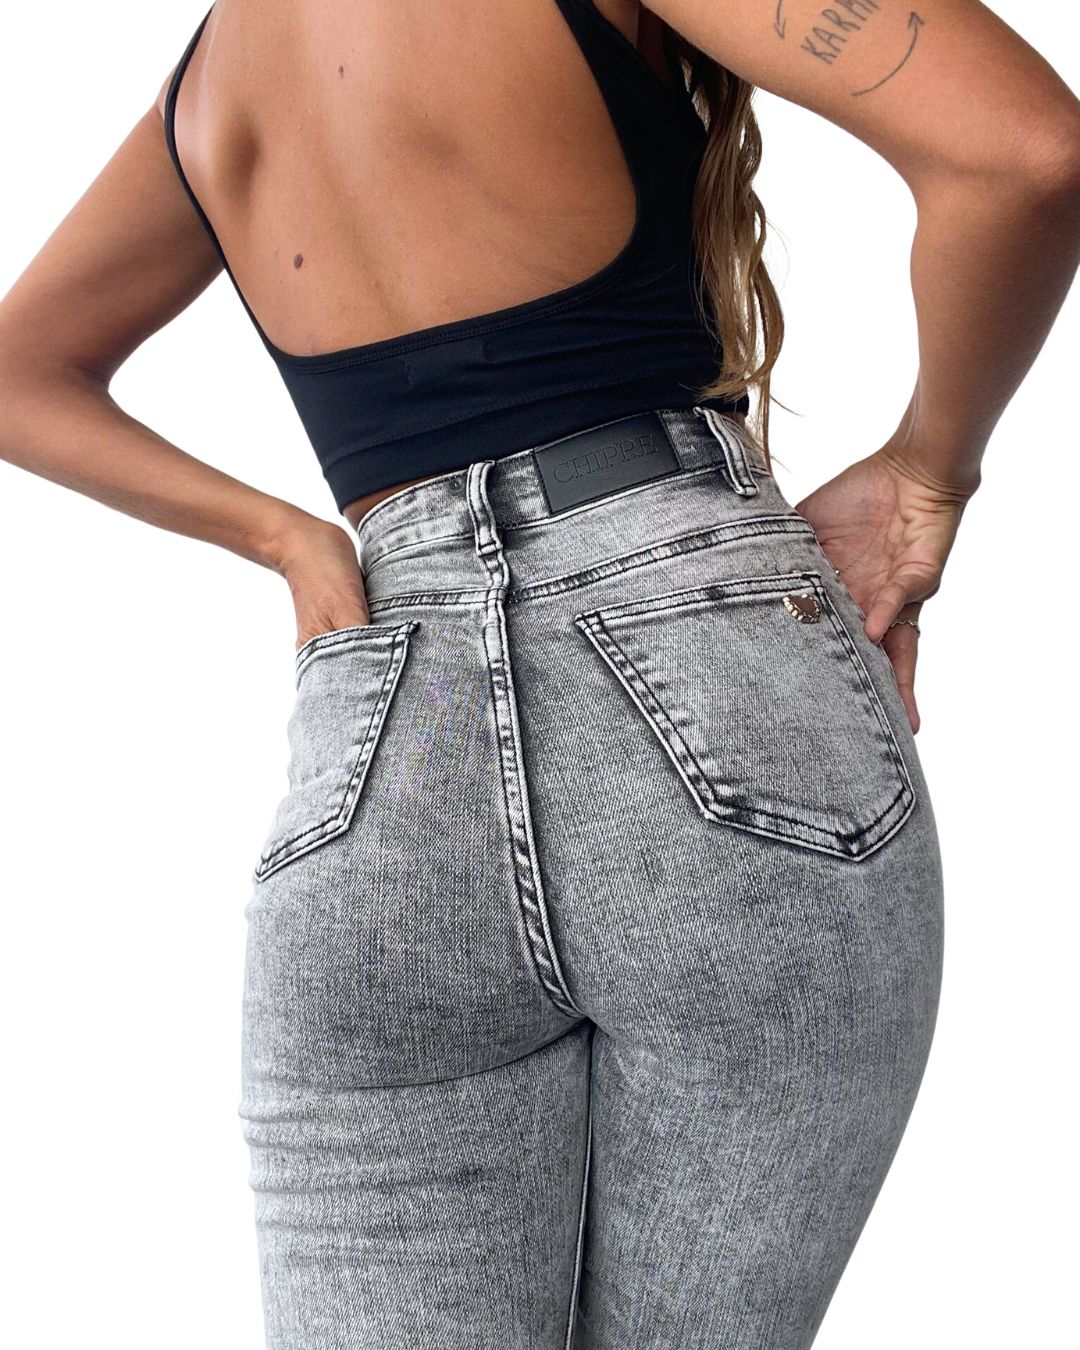 Golden High-Rise Skinny Jean #FlatteringFit - Chipre Basic Denim